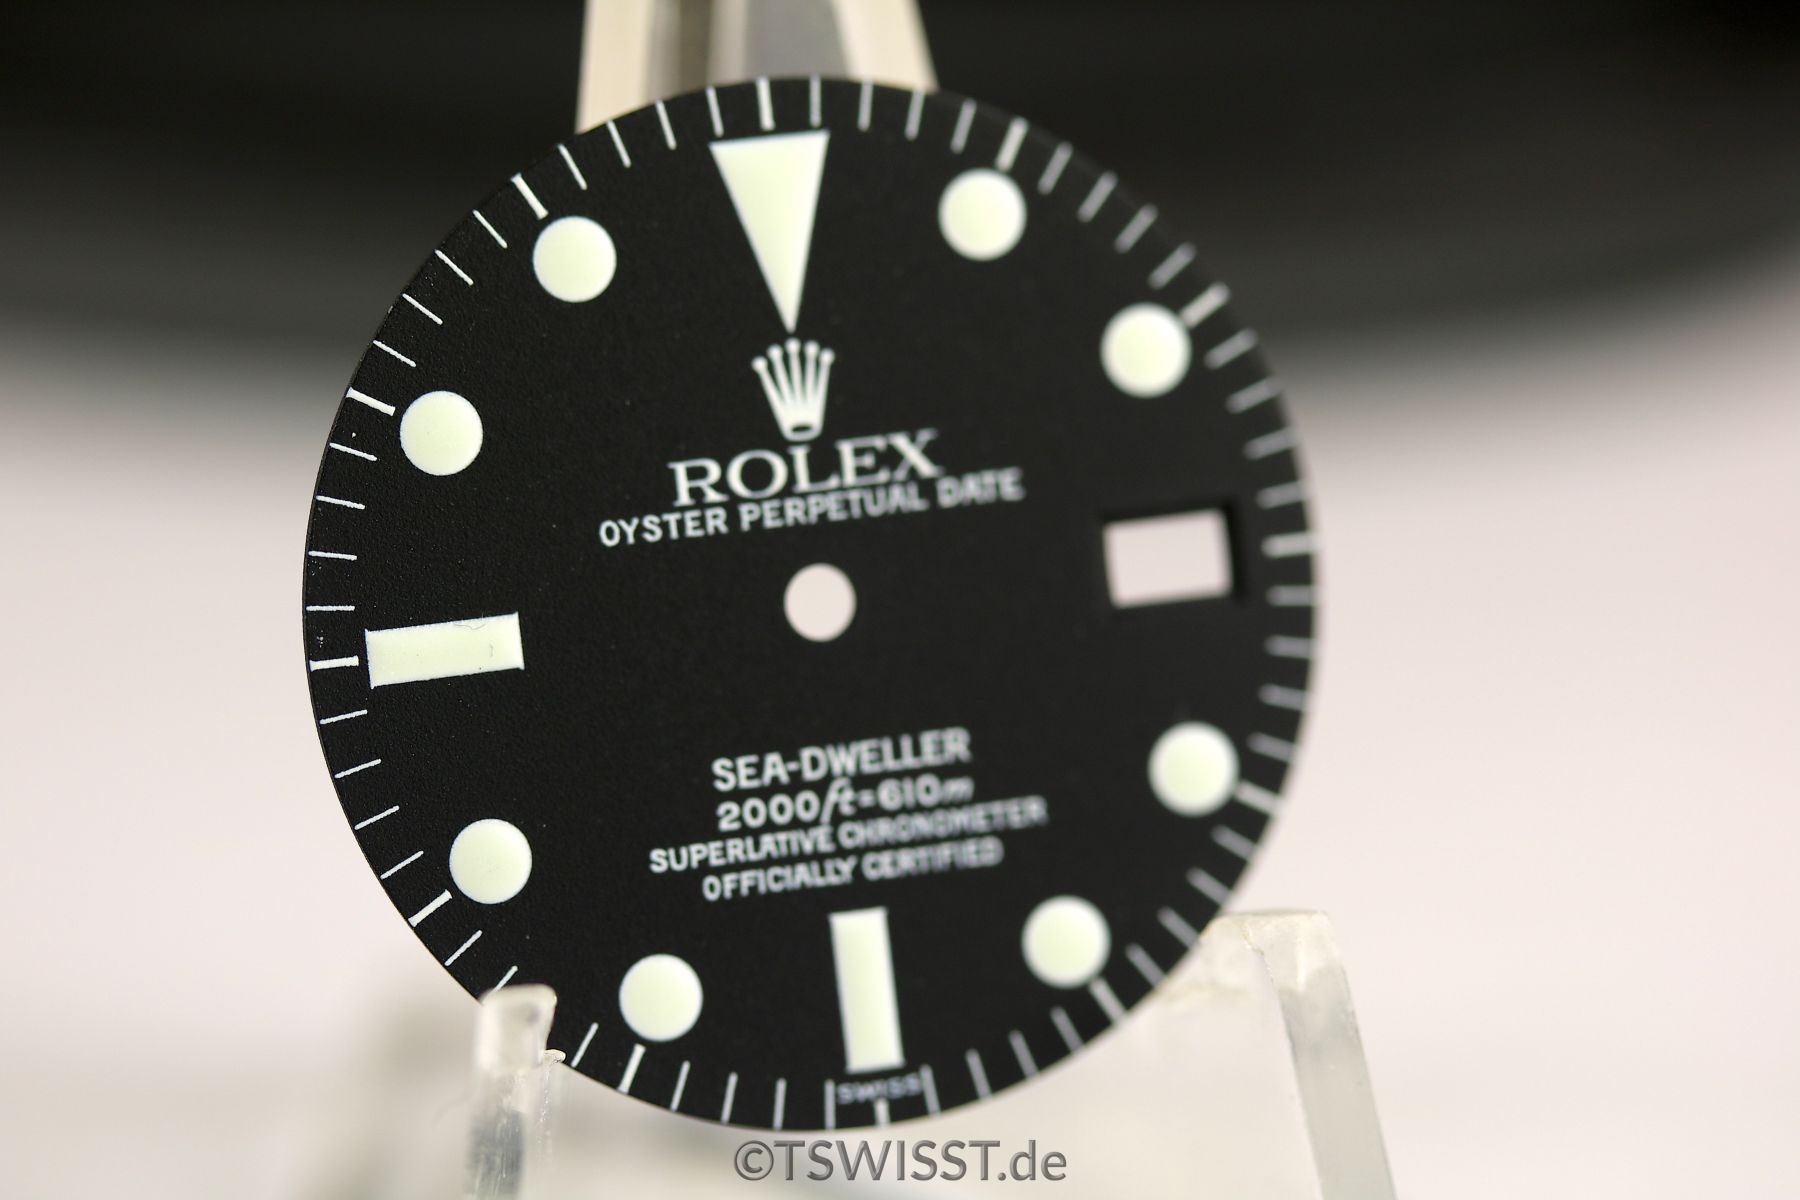 Rolex service dial for Sea-Dweller 1665